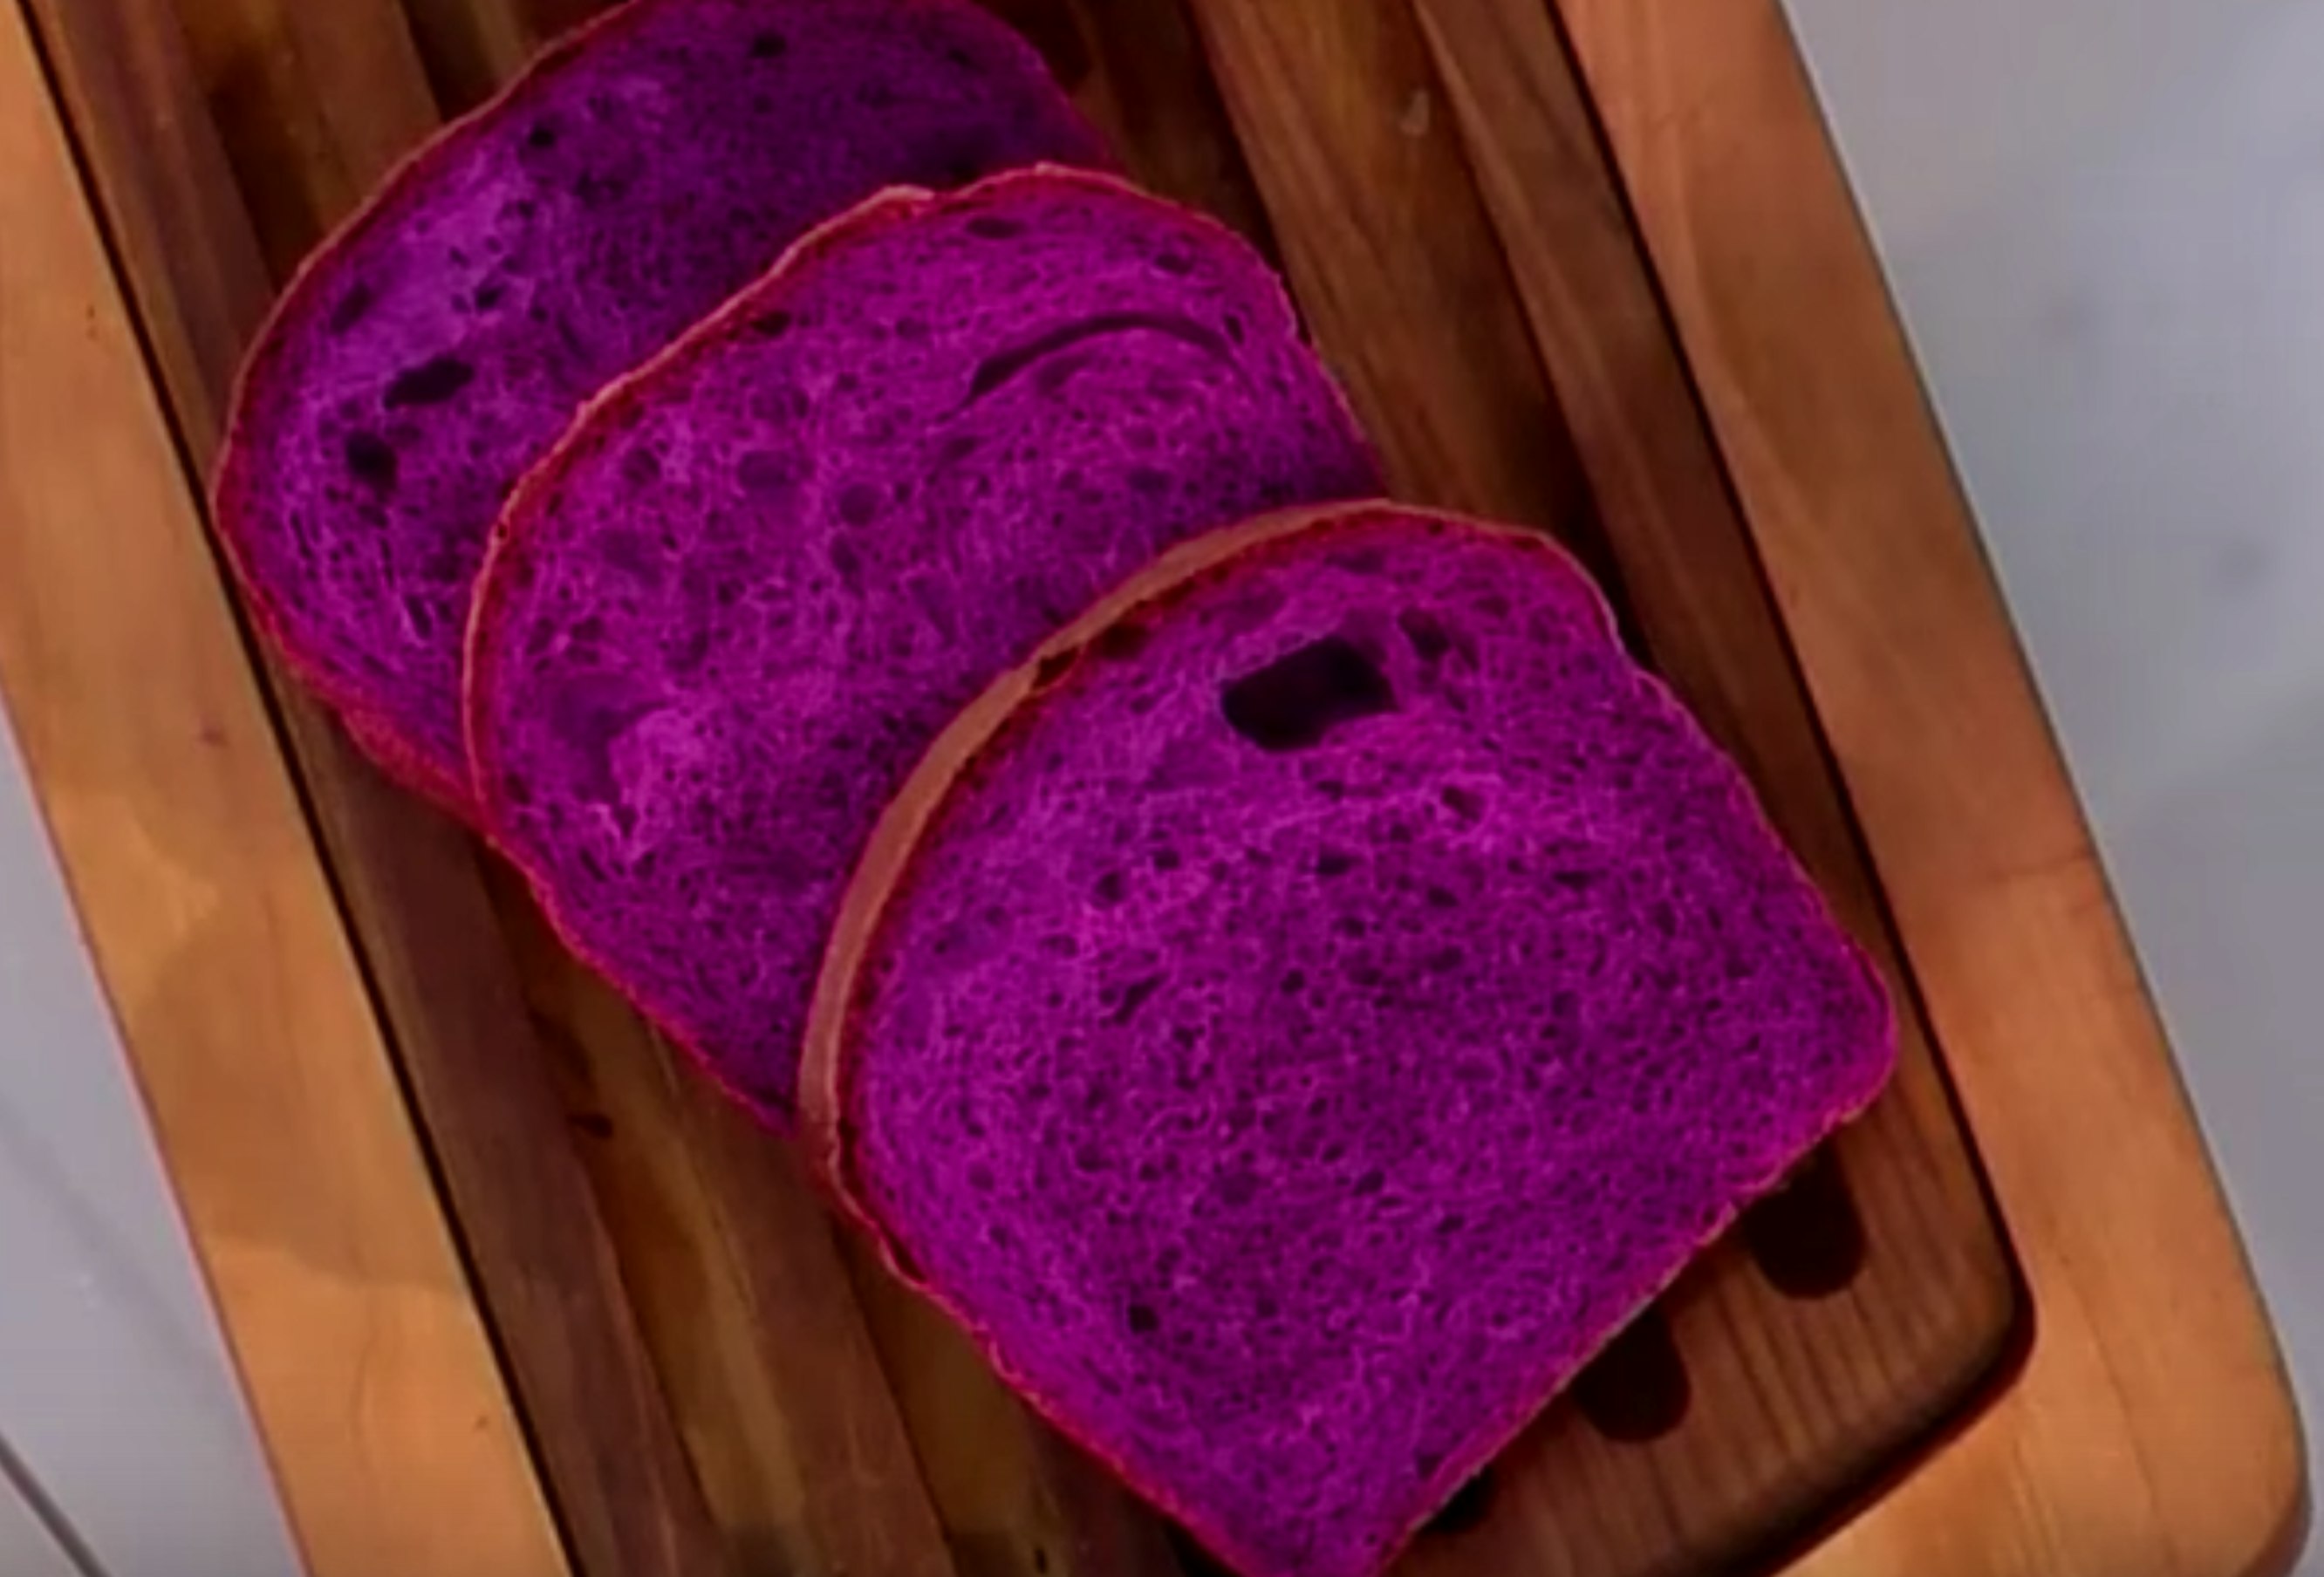 Purple bread is healthier bread.